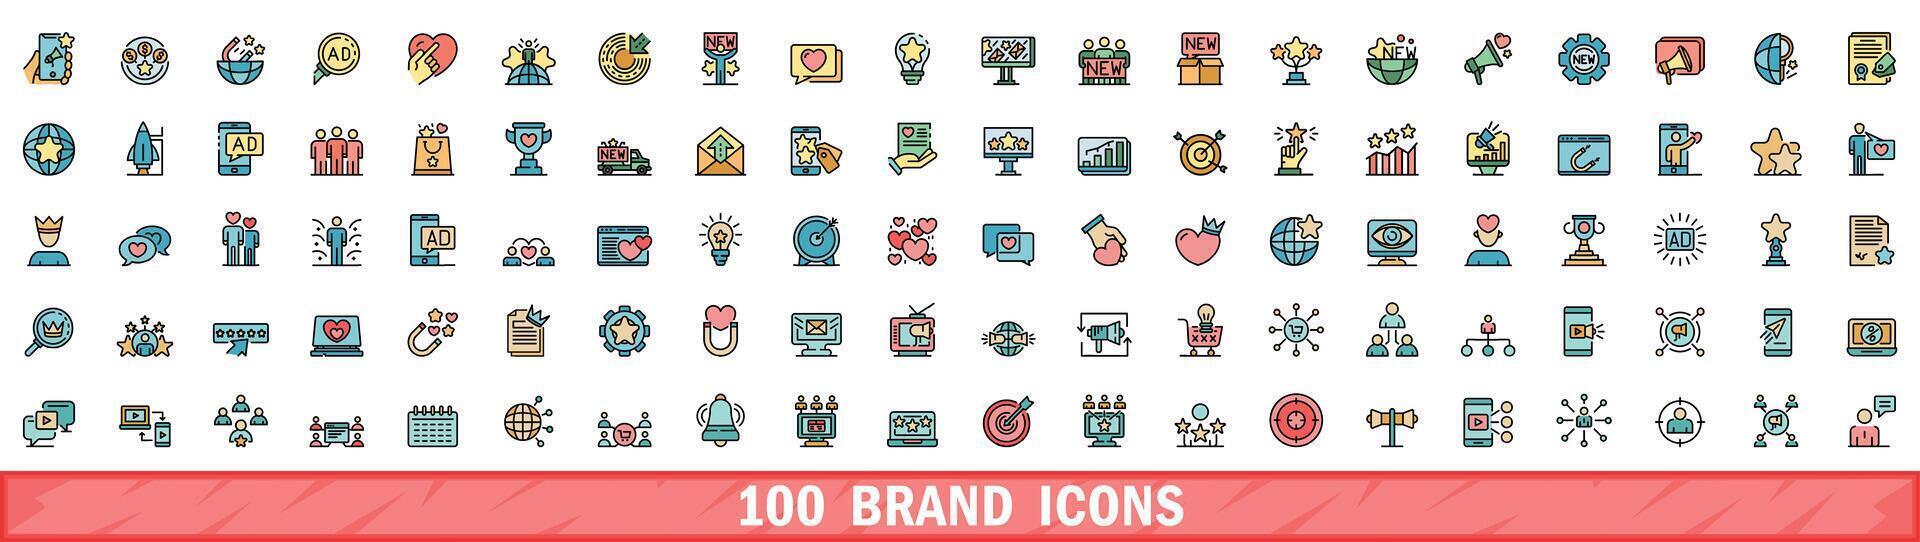 100 marca ícones definir, cor linha estilo vetor